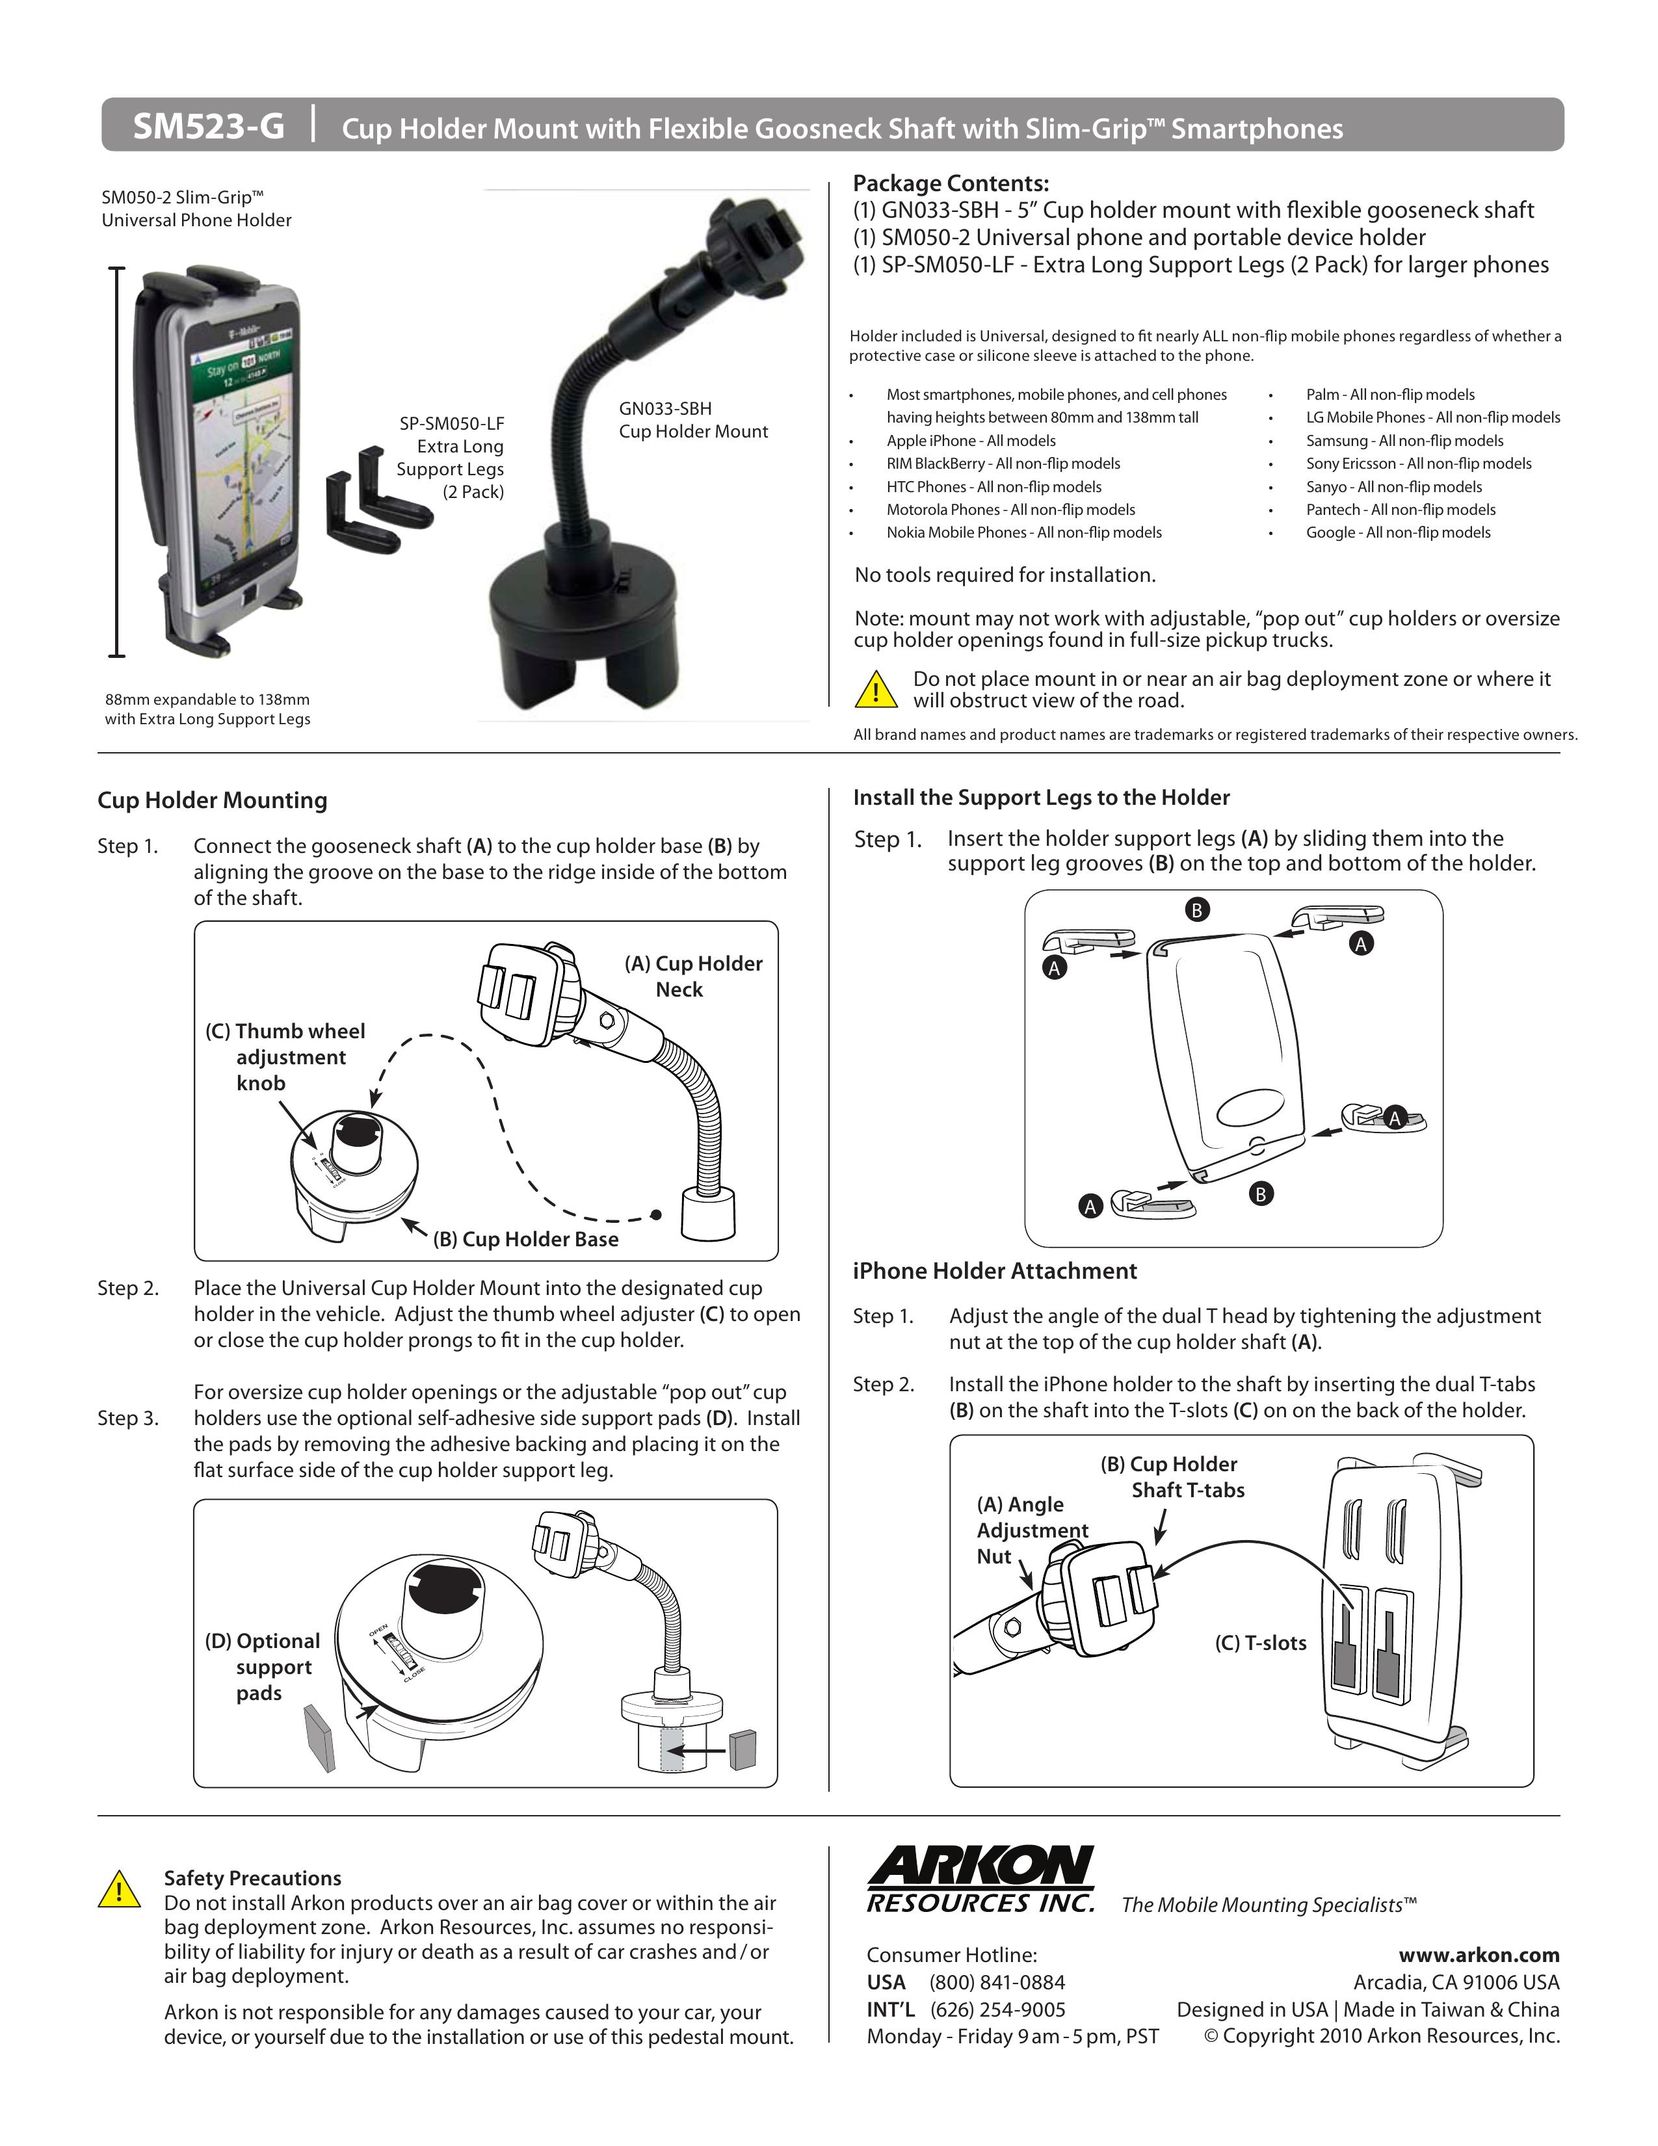 Avaya SM523-G Cell Phone User Manual